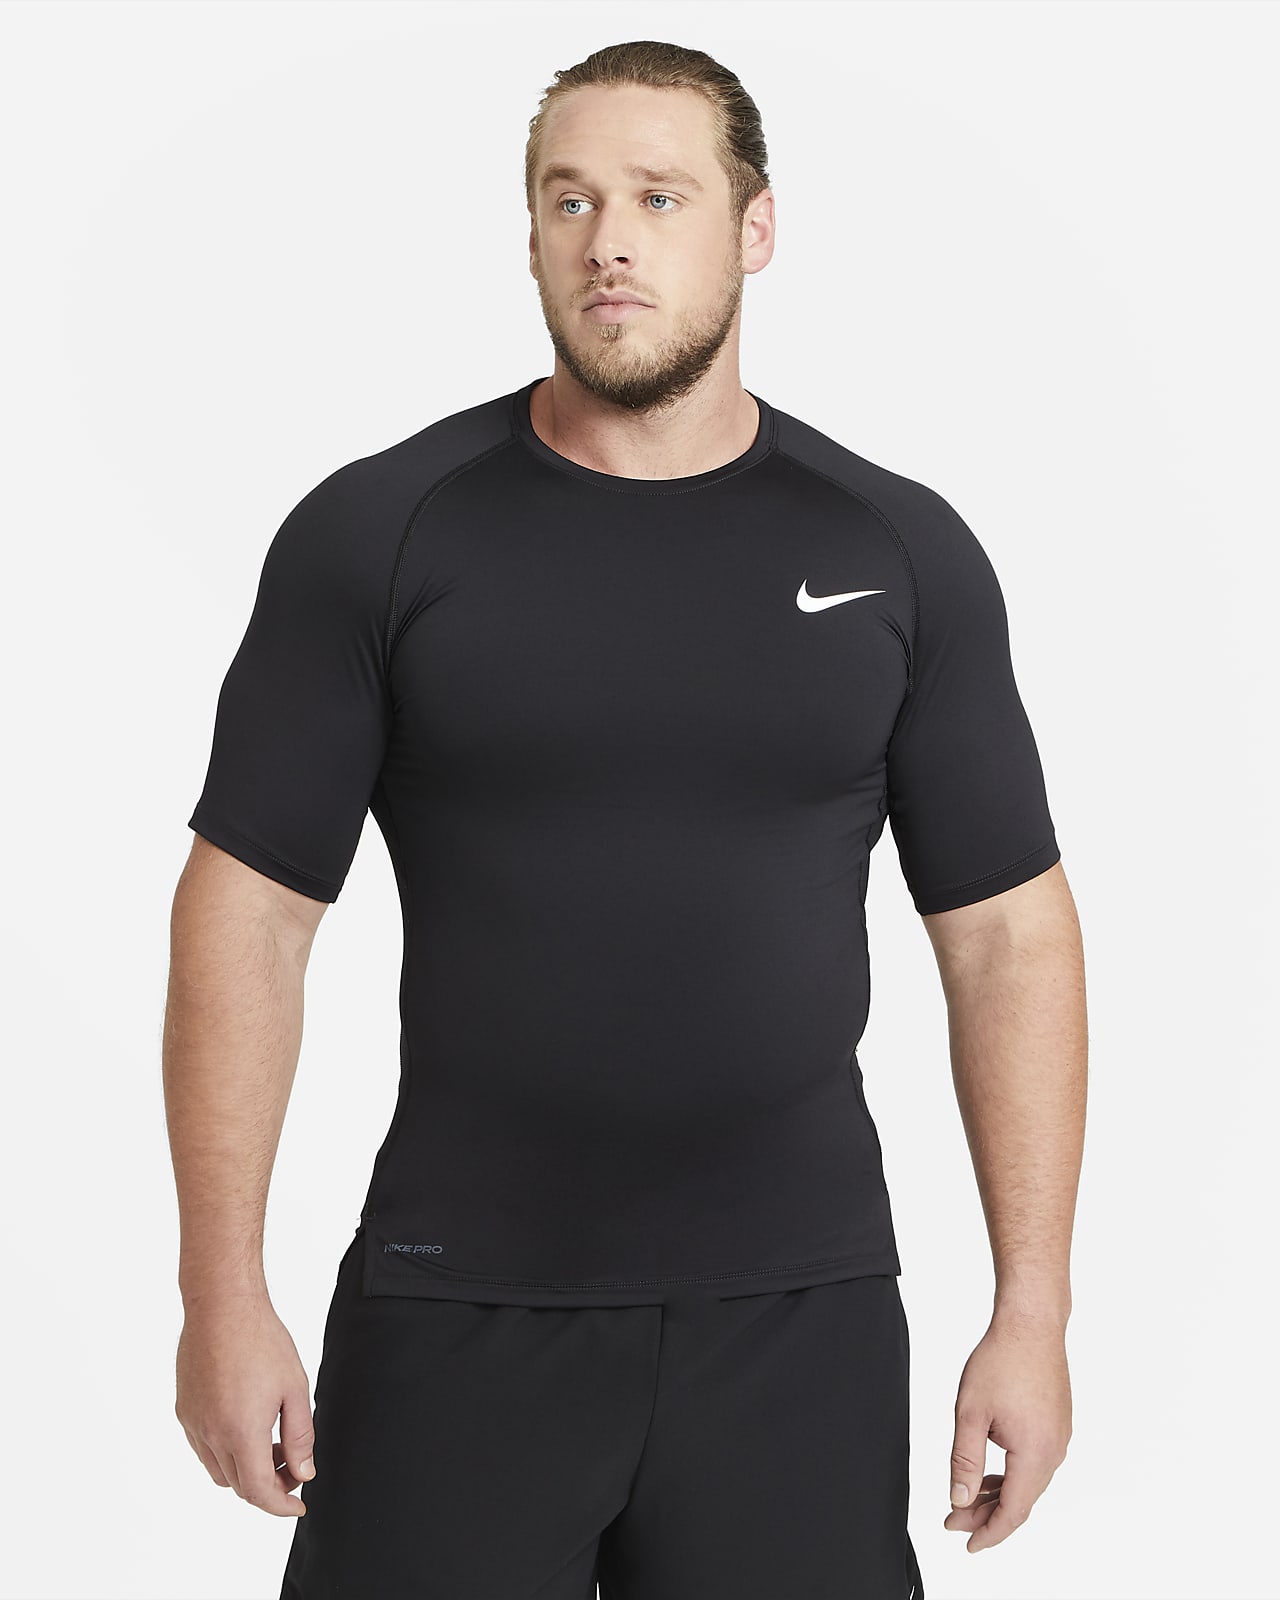 Nike Pro Men's Tight-Fit Short-Sleeve Top. Nike GB